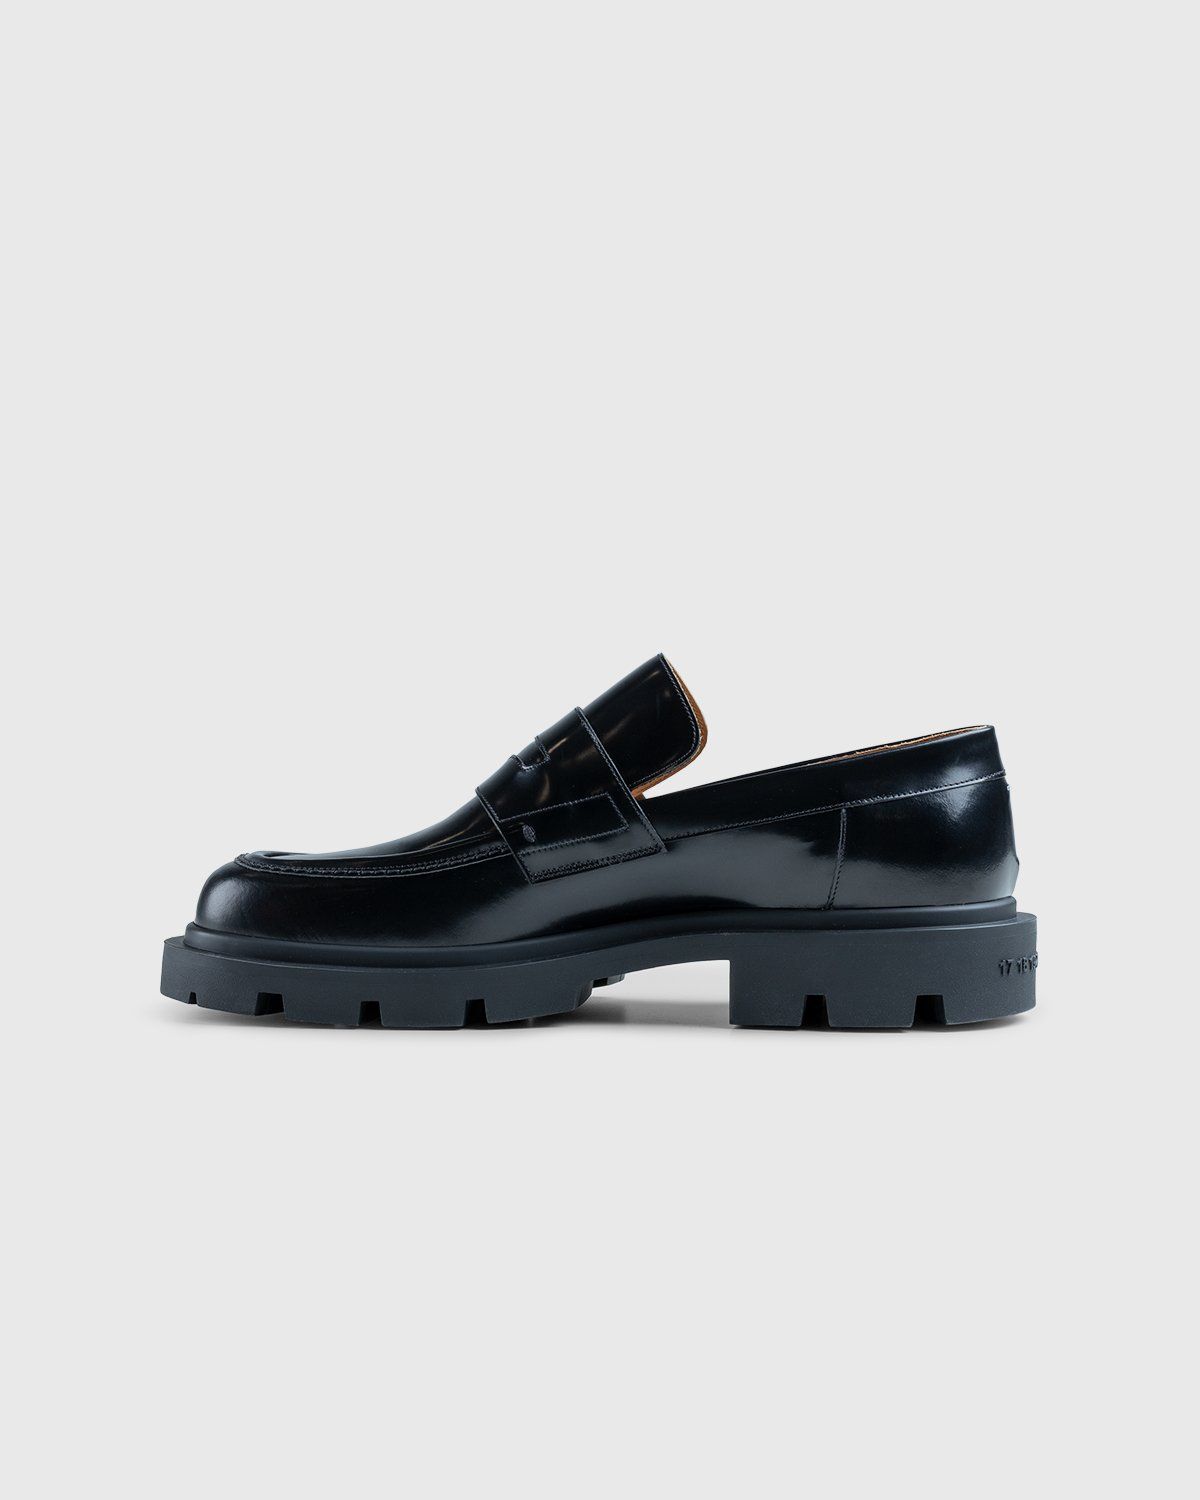 Maison Margiela – Leather Loafers Black - Loafers - Black - Image 7